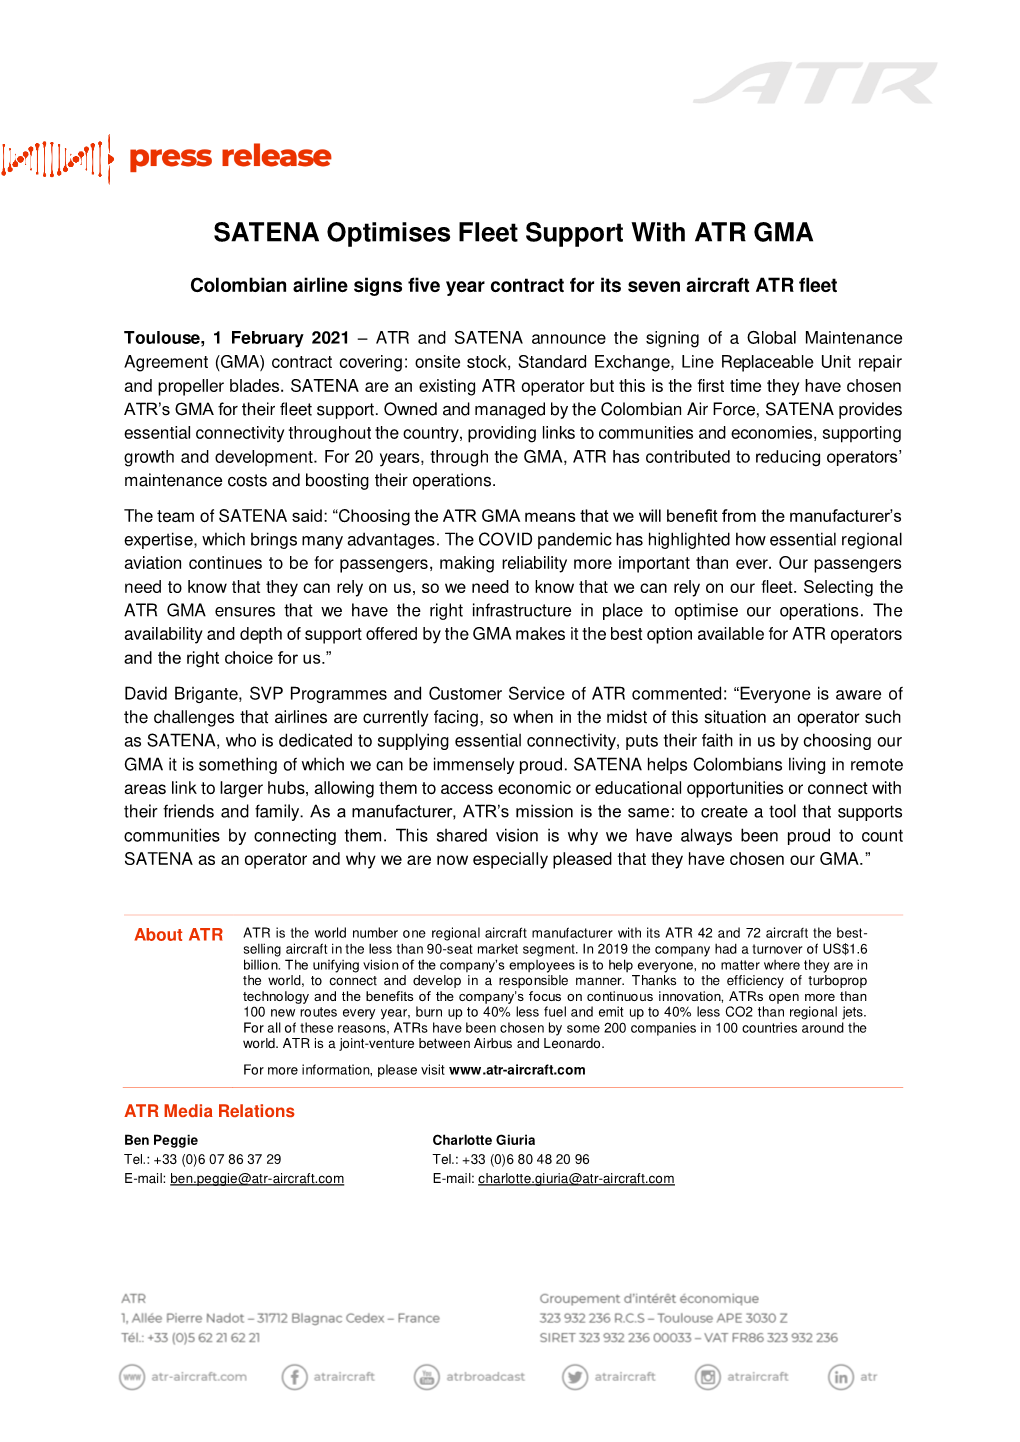 SATENA Optimises Fleet Support with ATR GMA